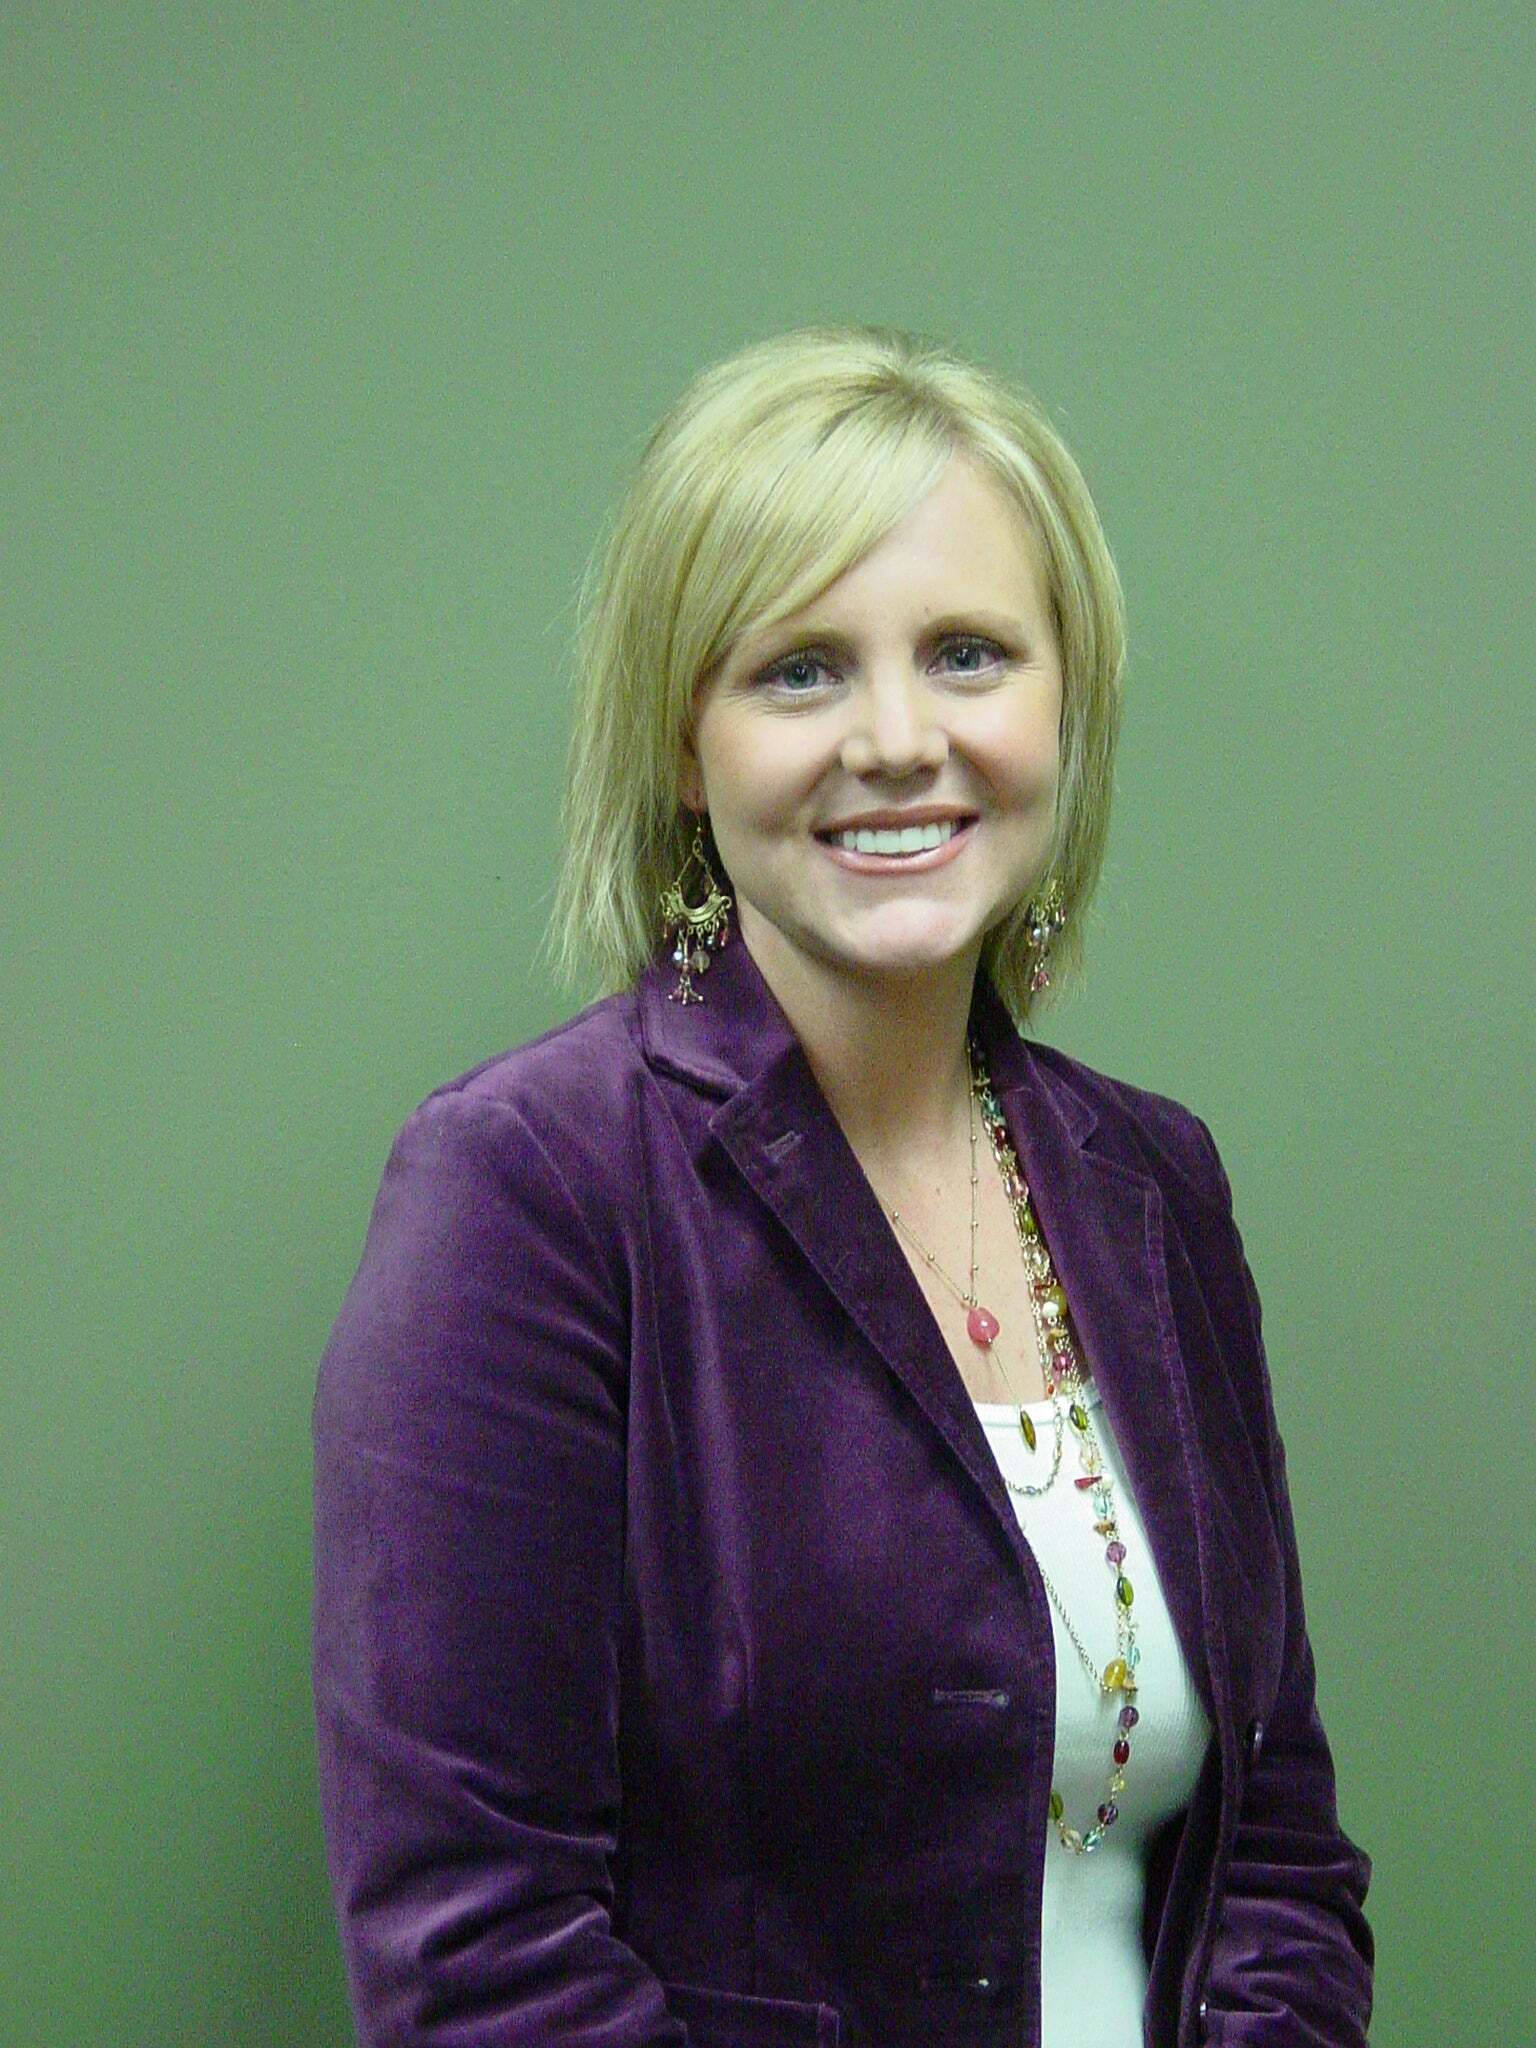 Andrea Miller, Real Estate Salesperson in Roseville, Reliance Partners